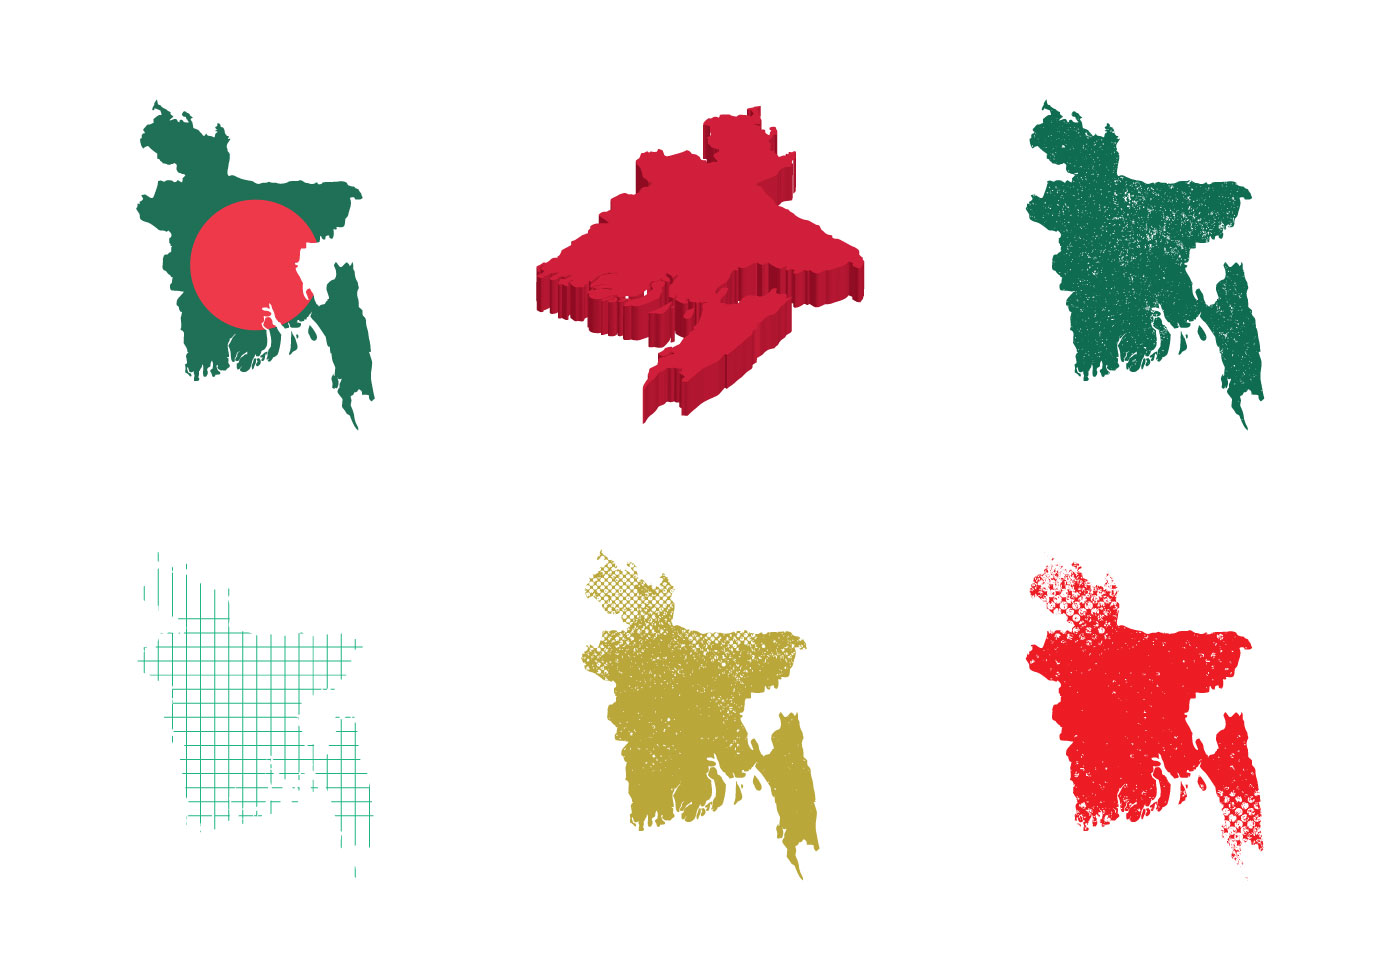 Bangladesh Political Map Eps Illustrator Map Vector Maps Images